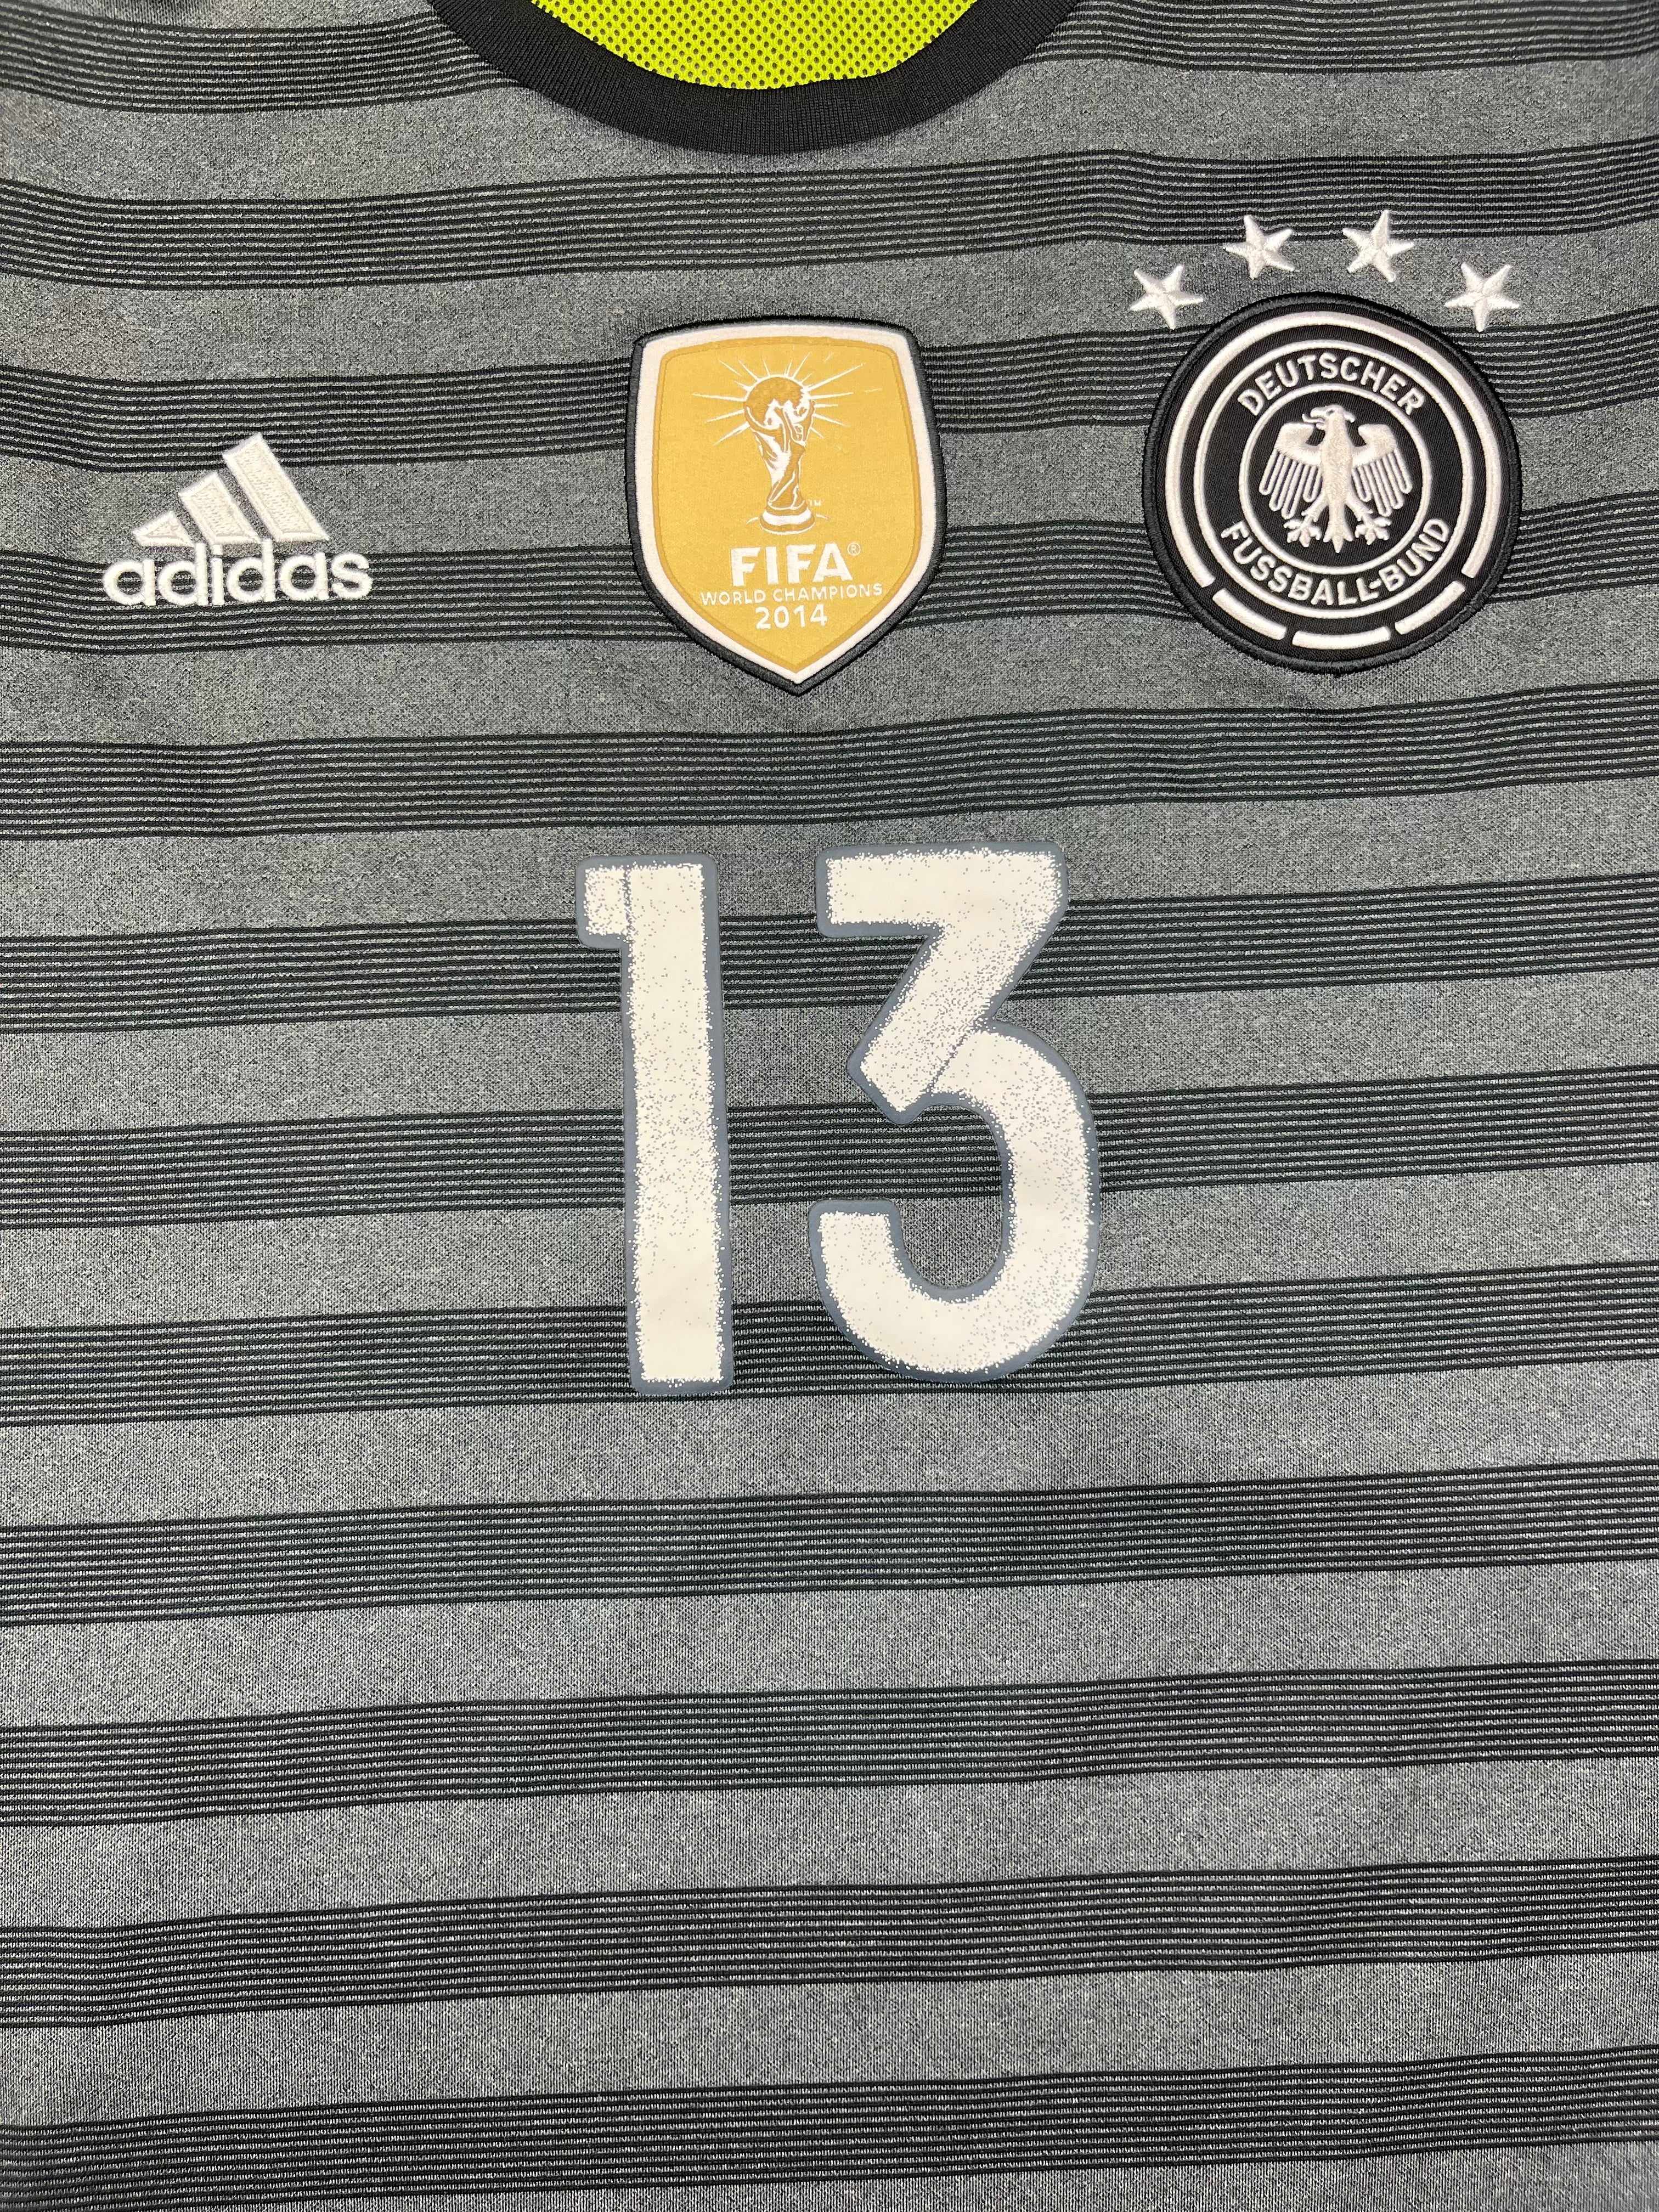 2016/17 Germany Reversible Away Shirt Muller #13 (XL) 9/10